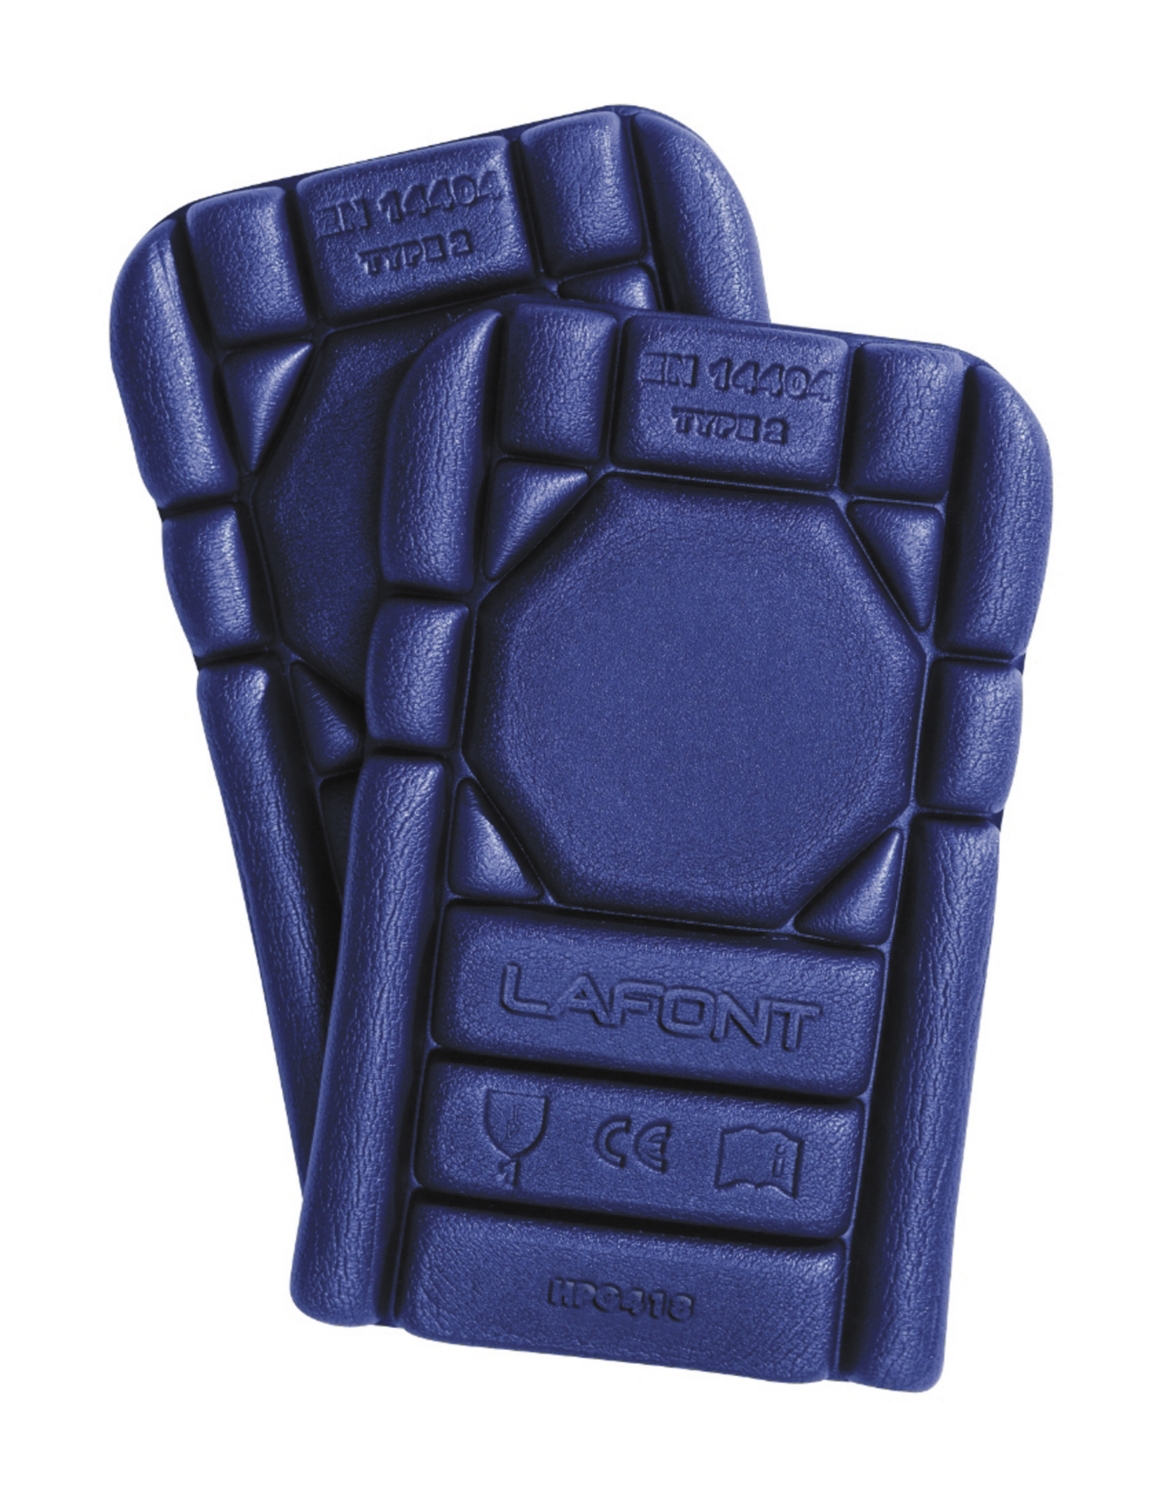  Plaques genoux Go HPG418 - Bleu marine 